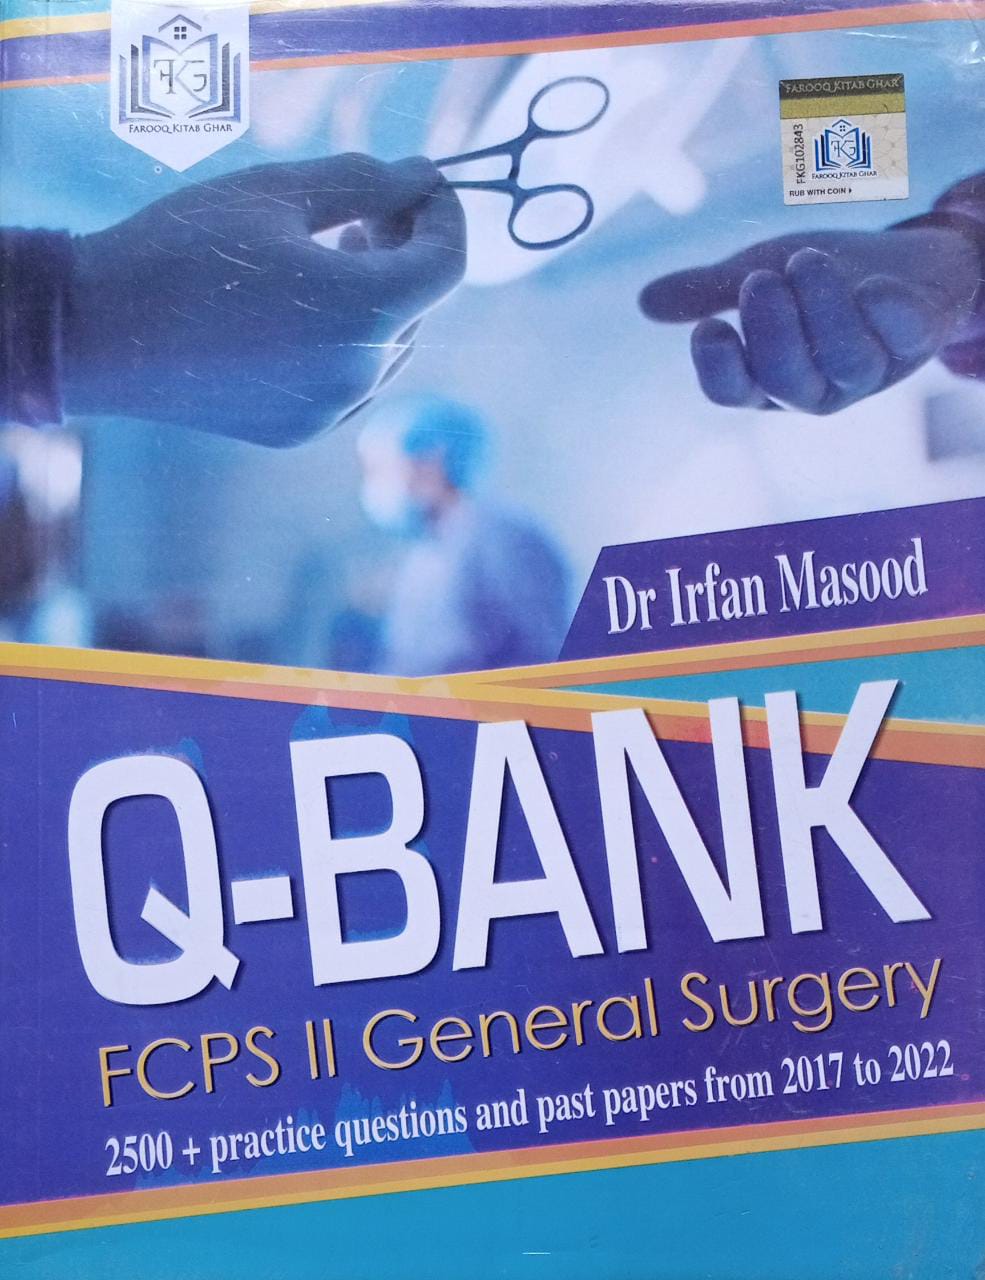 q-bank fcps ii general surgery